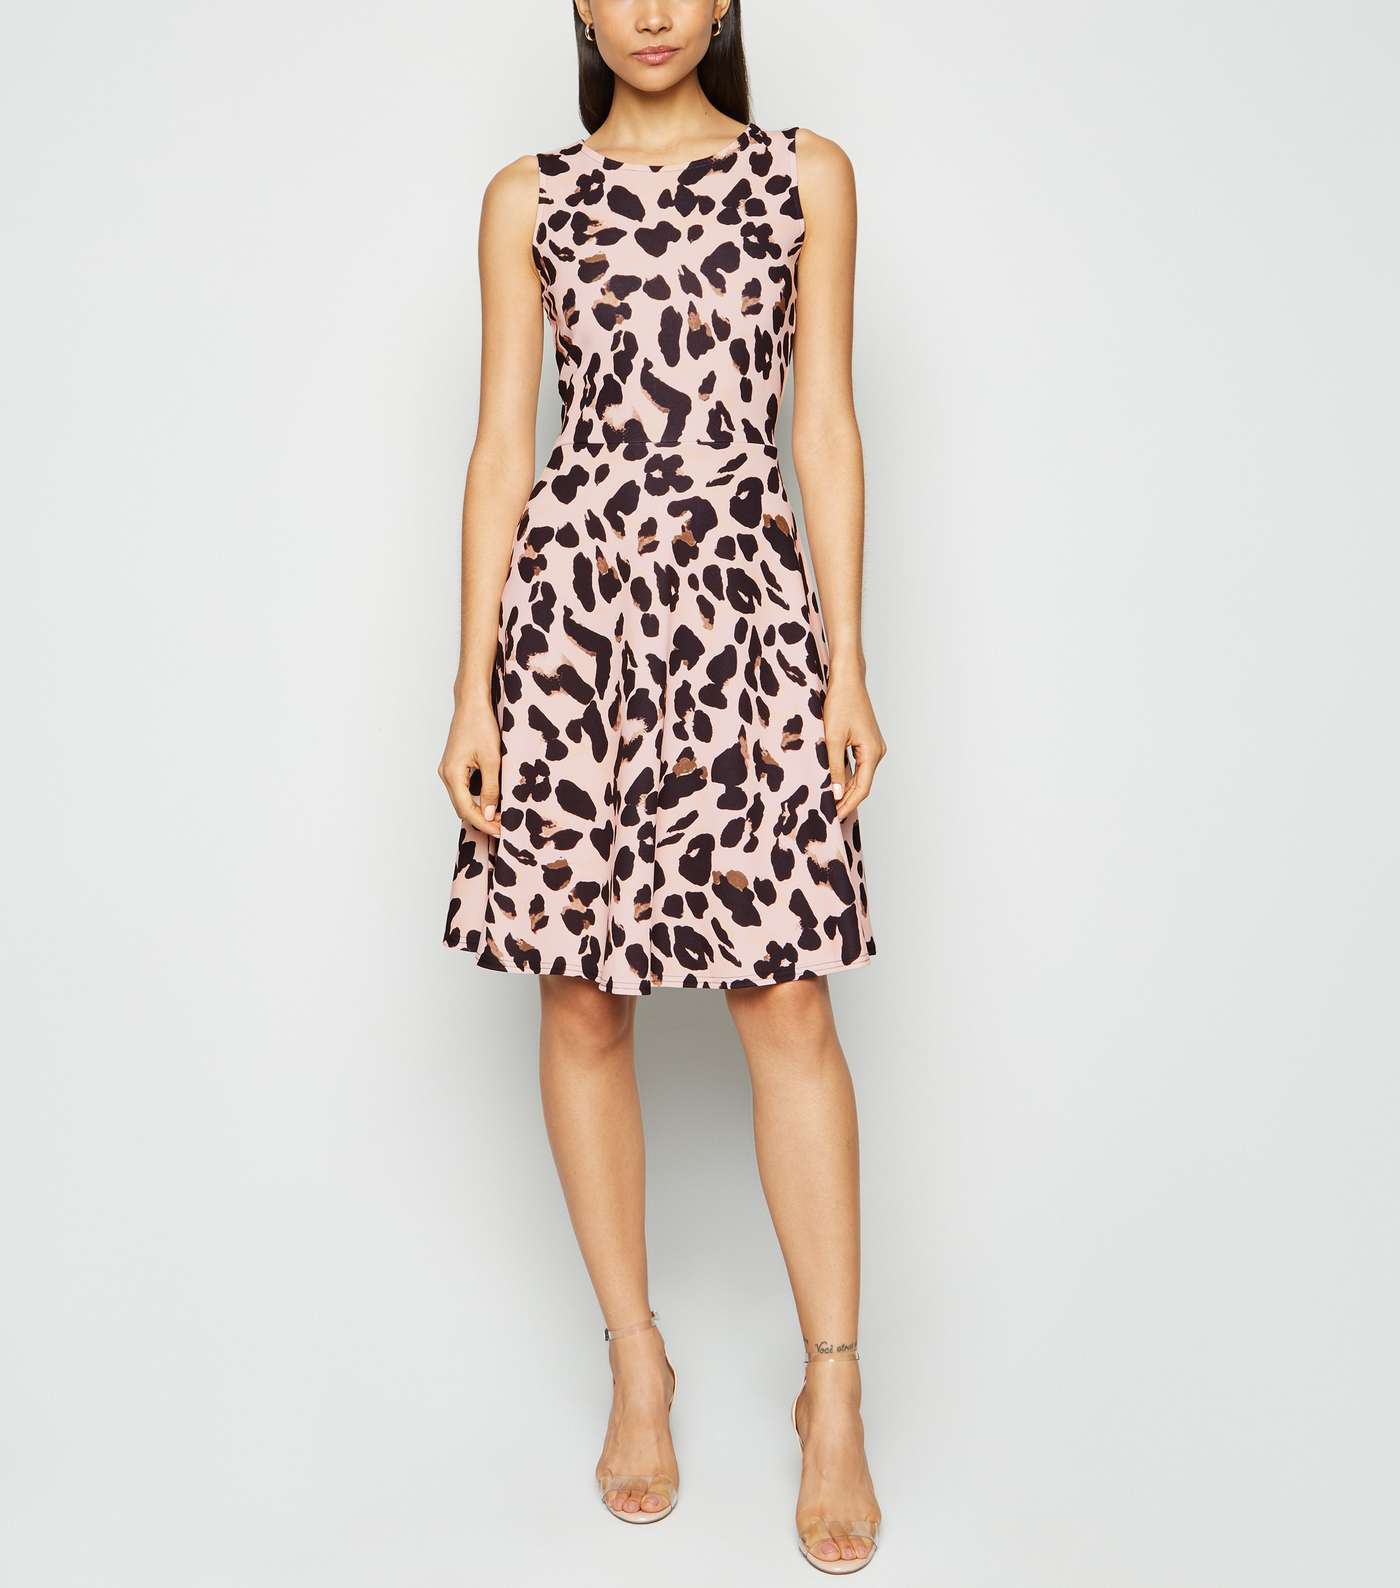 Missfiga Pink Leopard Print Skater Dress Image 2